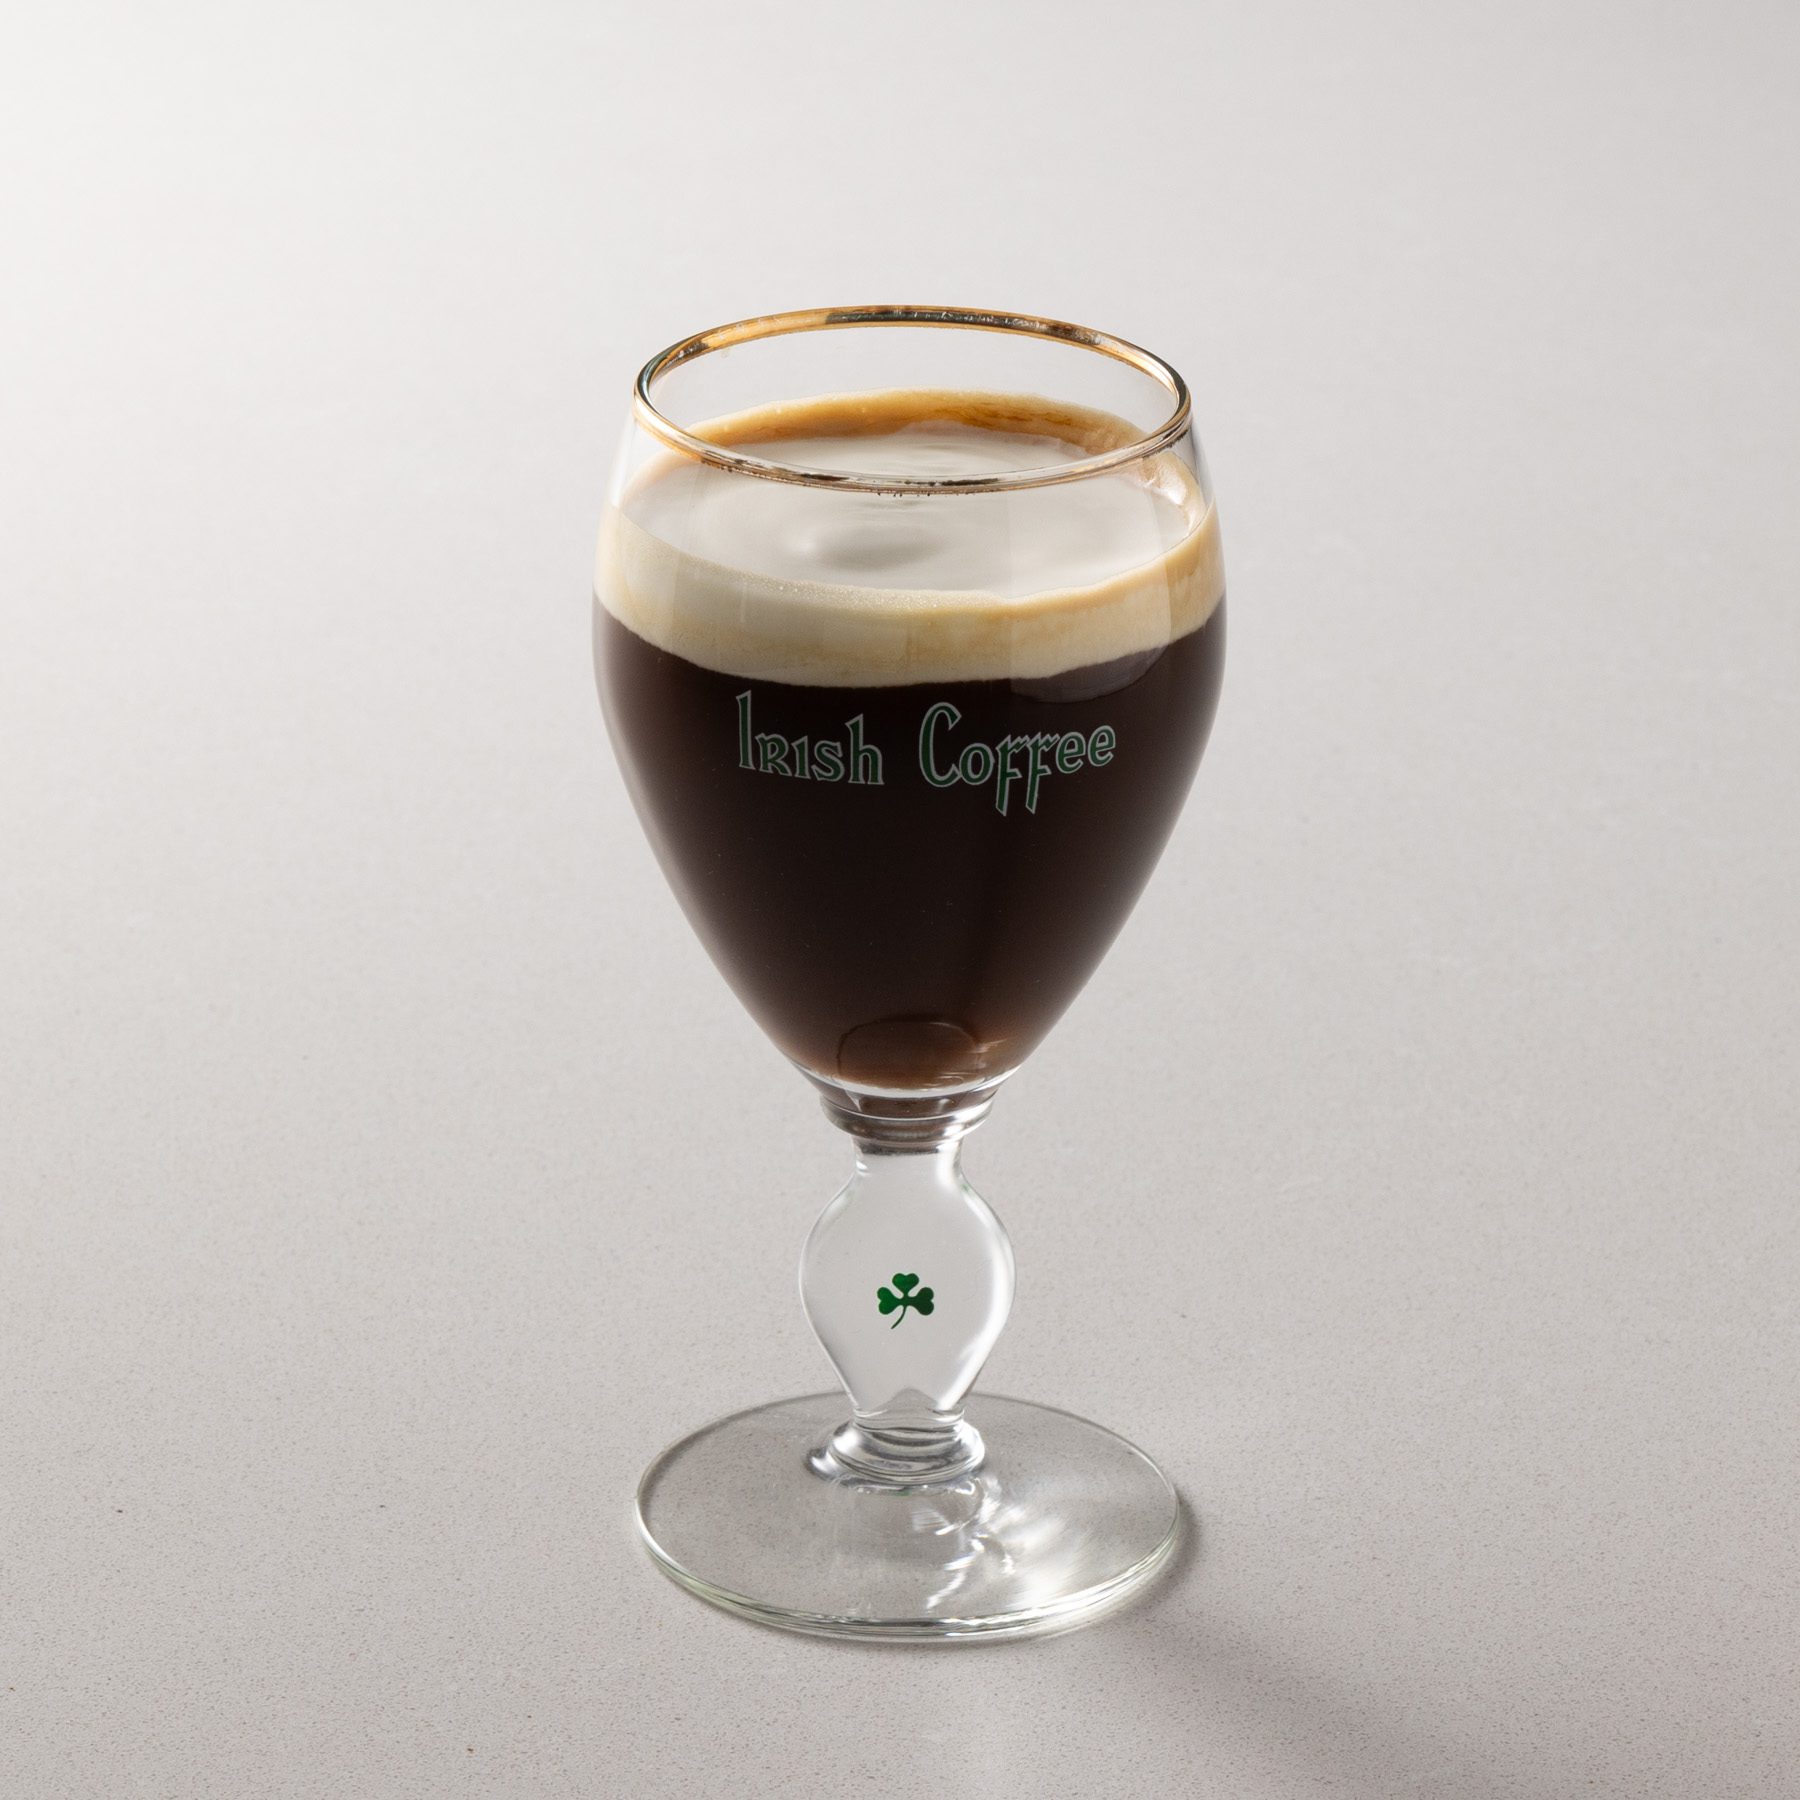 Irish Coffee cocktail